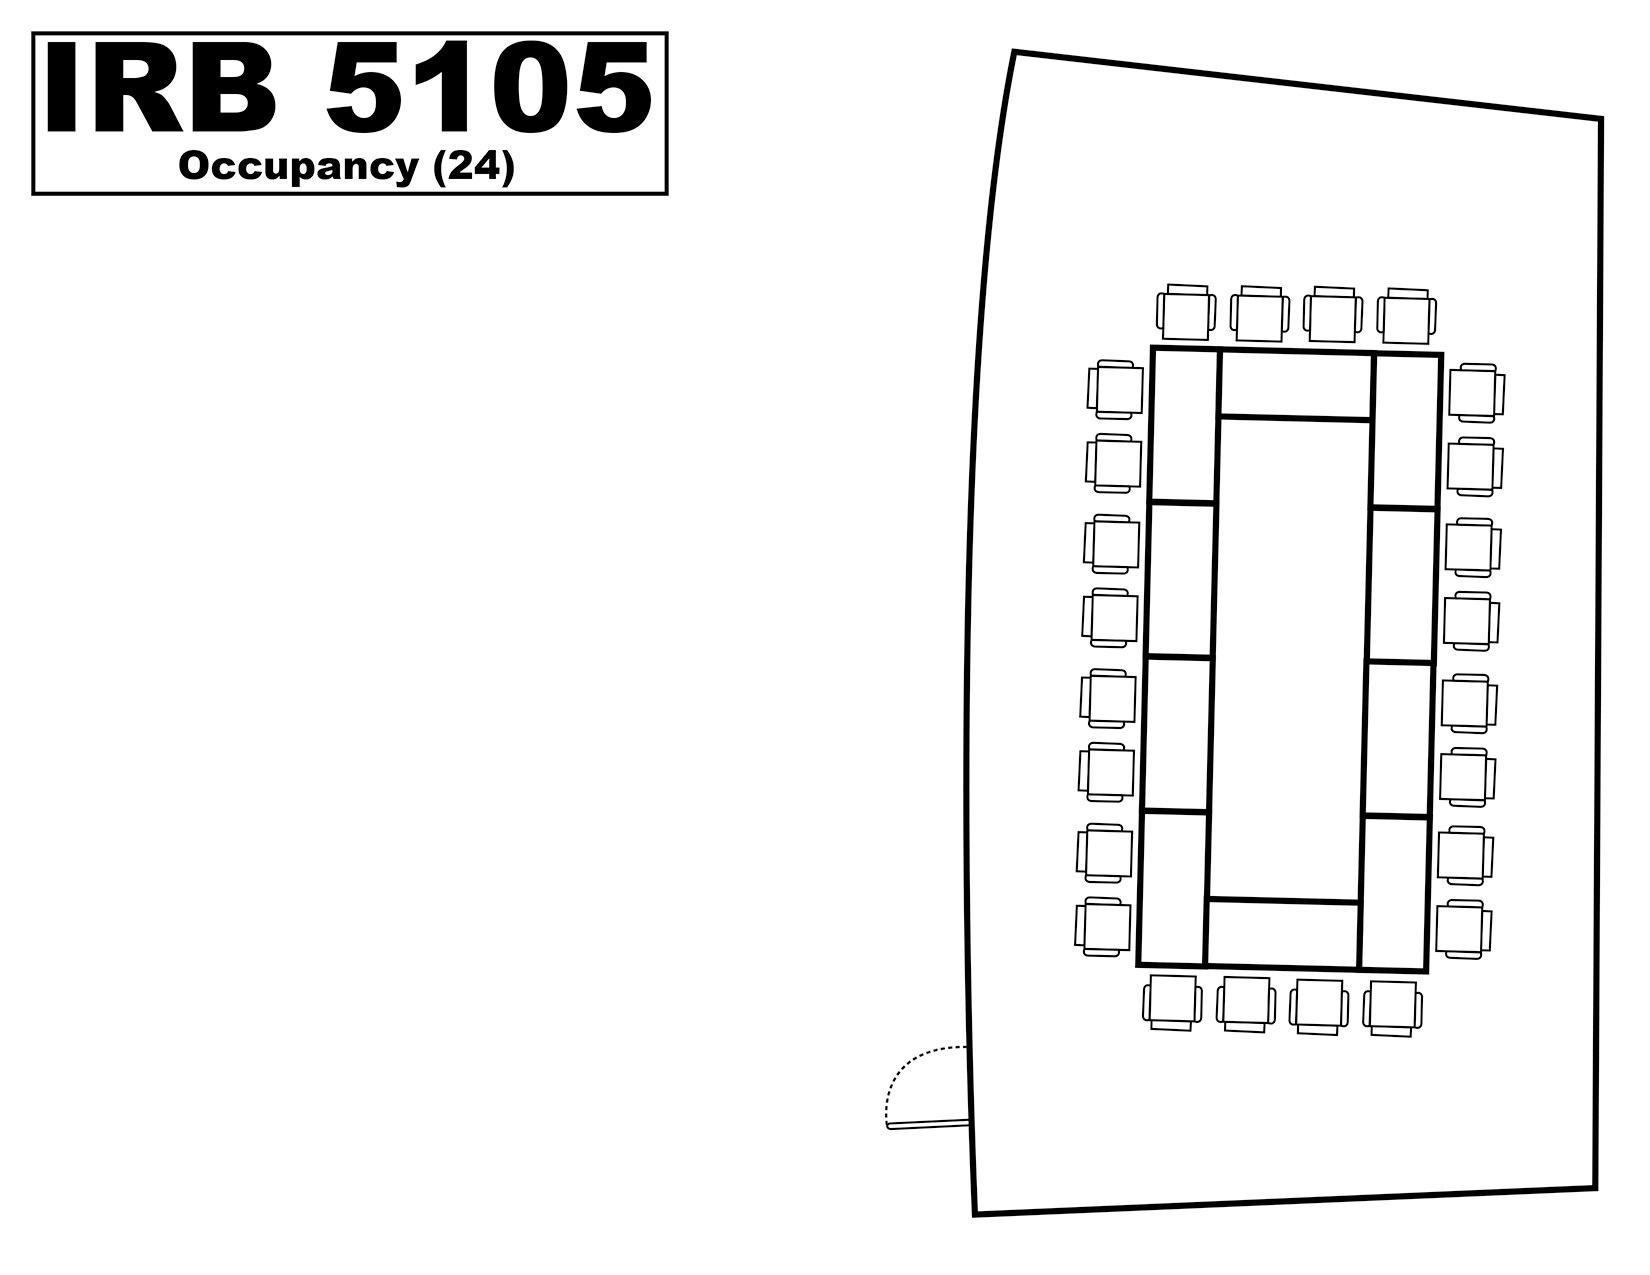 IRB5105 floorplan